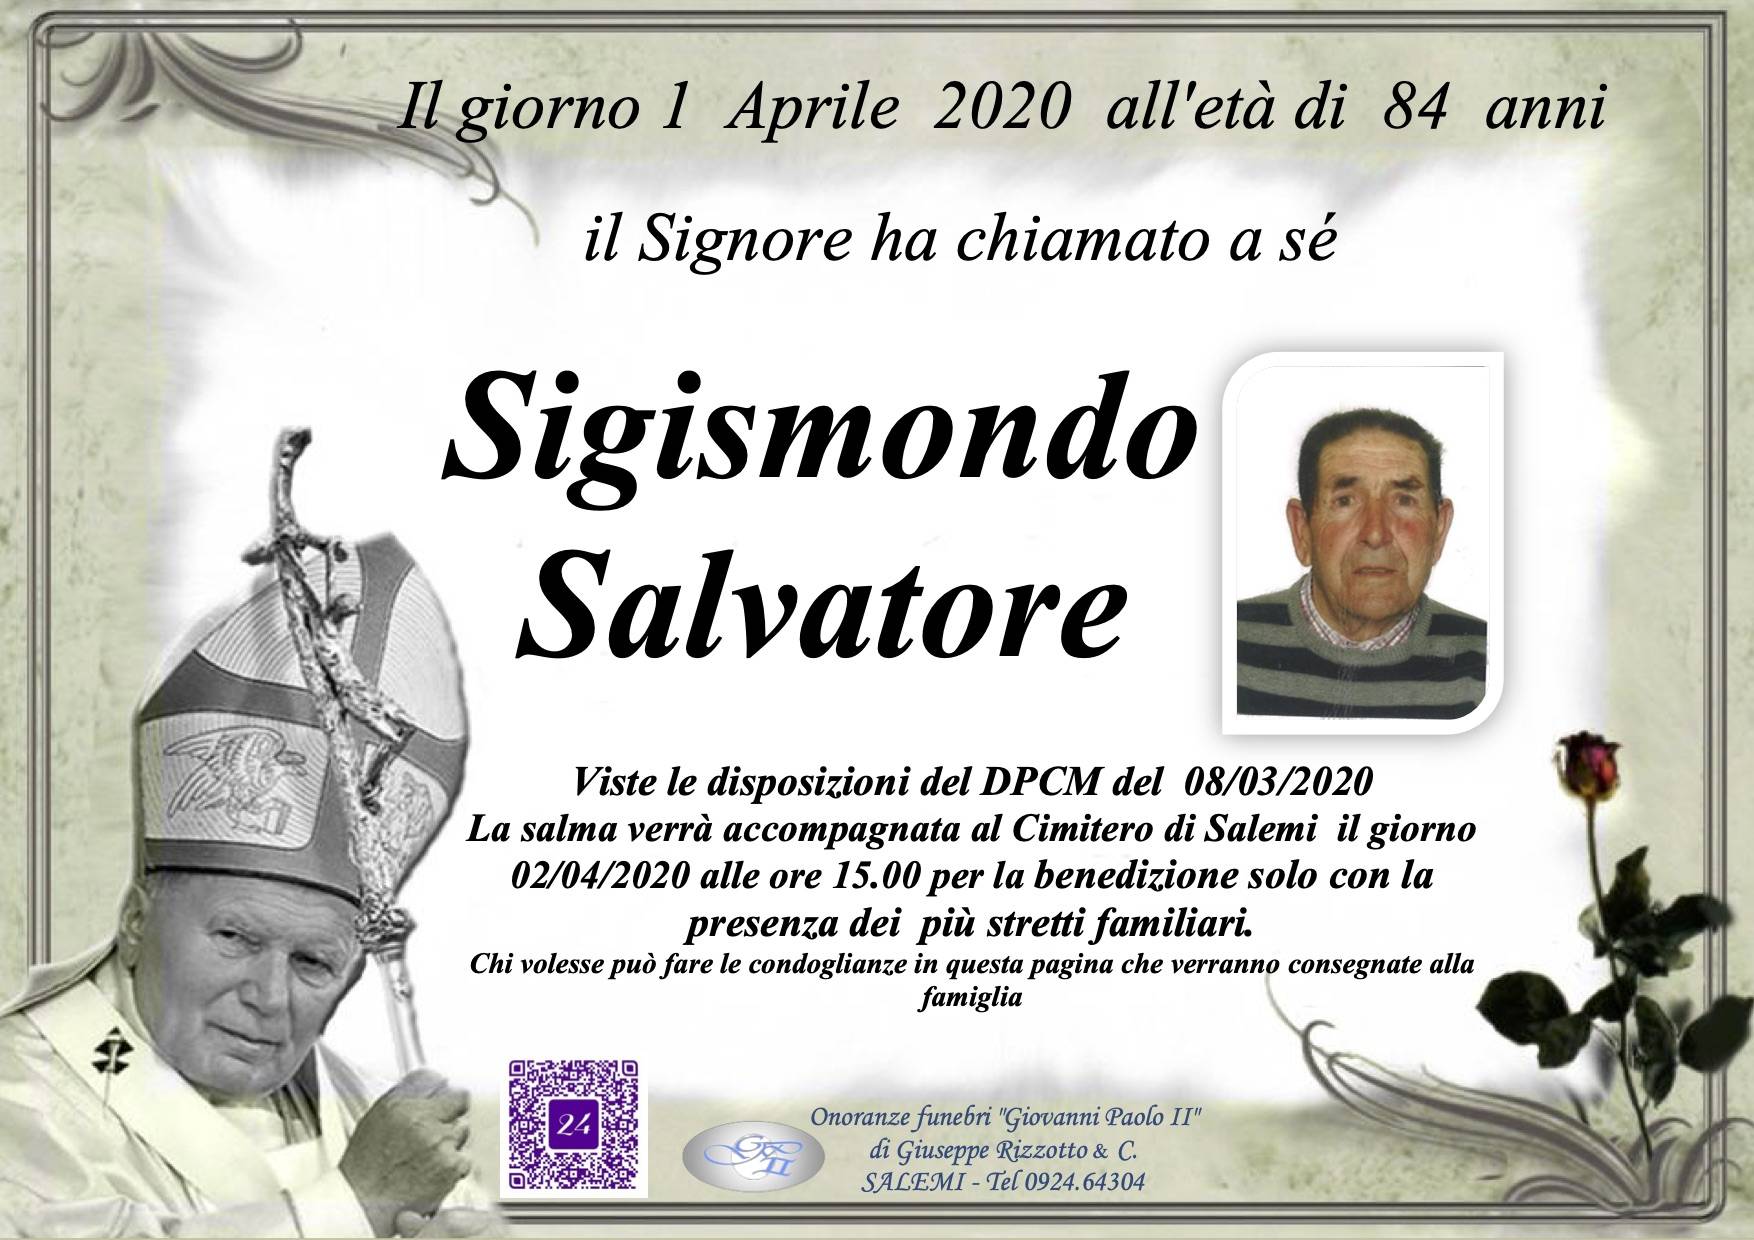 Salvatore Sigismondo